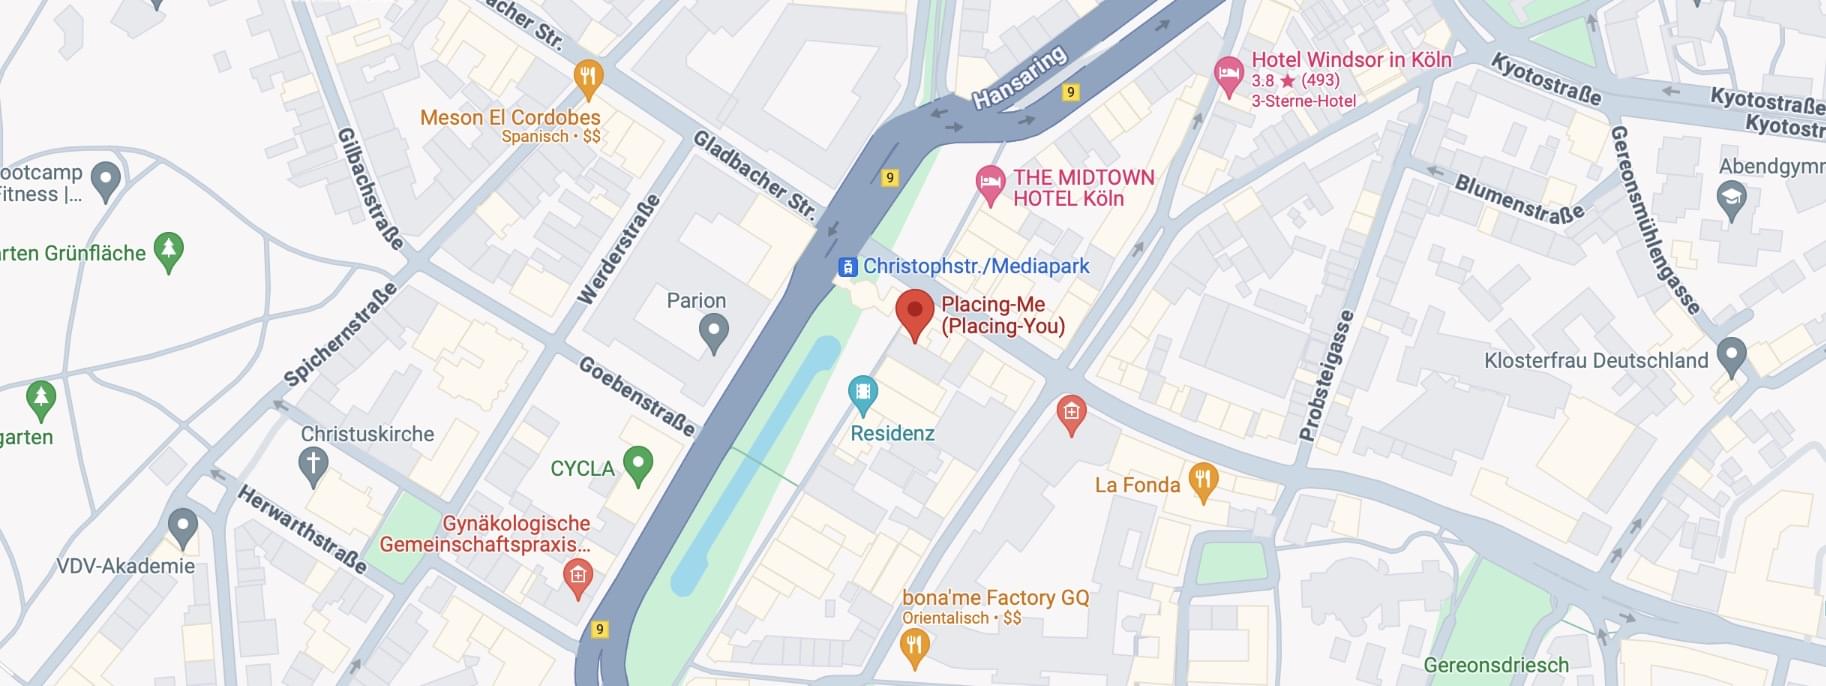 Marker Placing-Me Google Maps